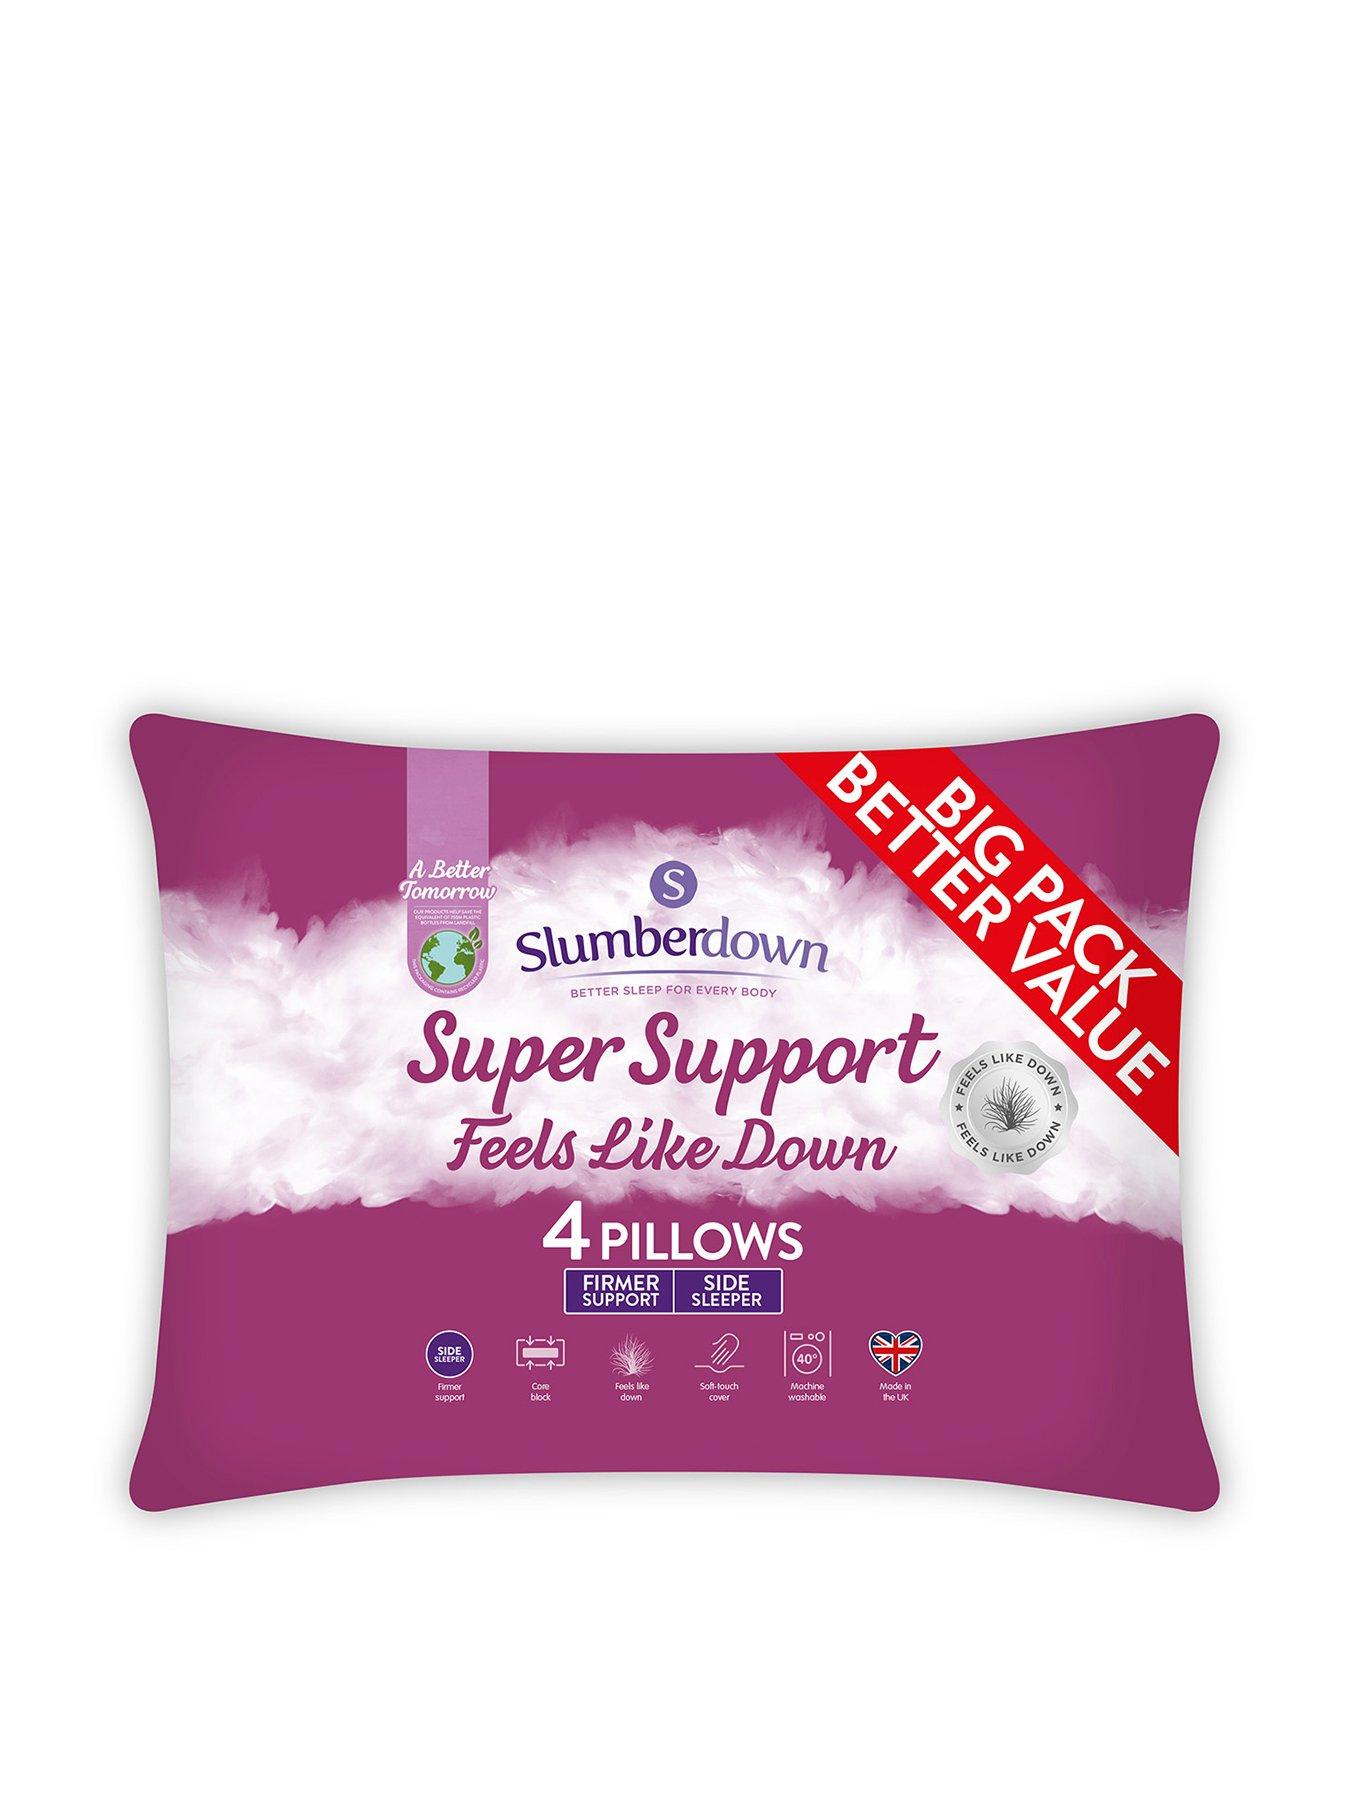 Slumberdown Feels Like Down Super Support Pack of 4 Pillows - White